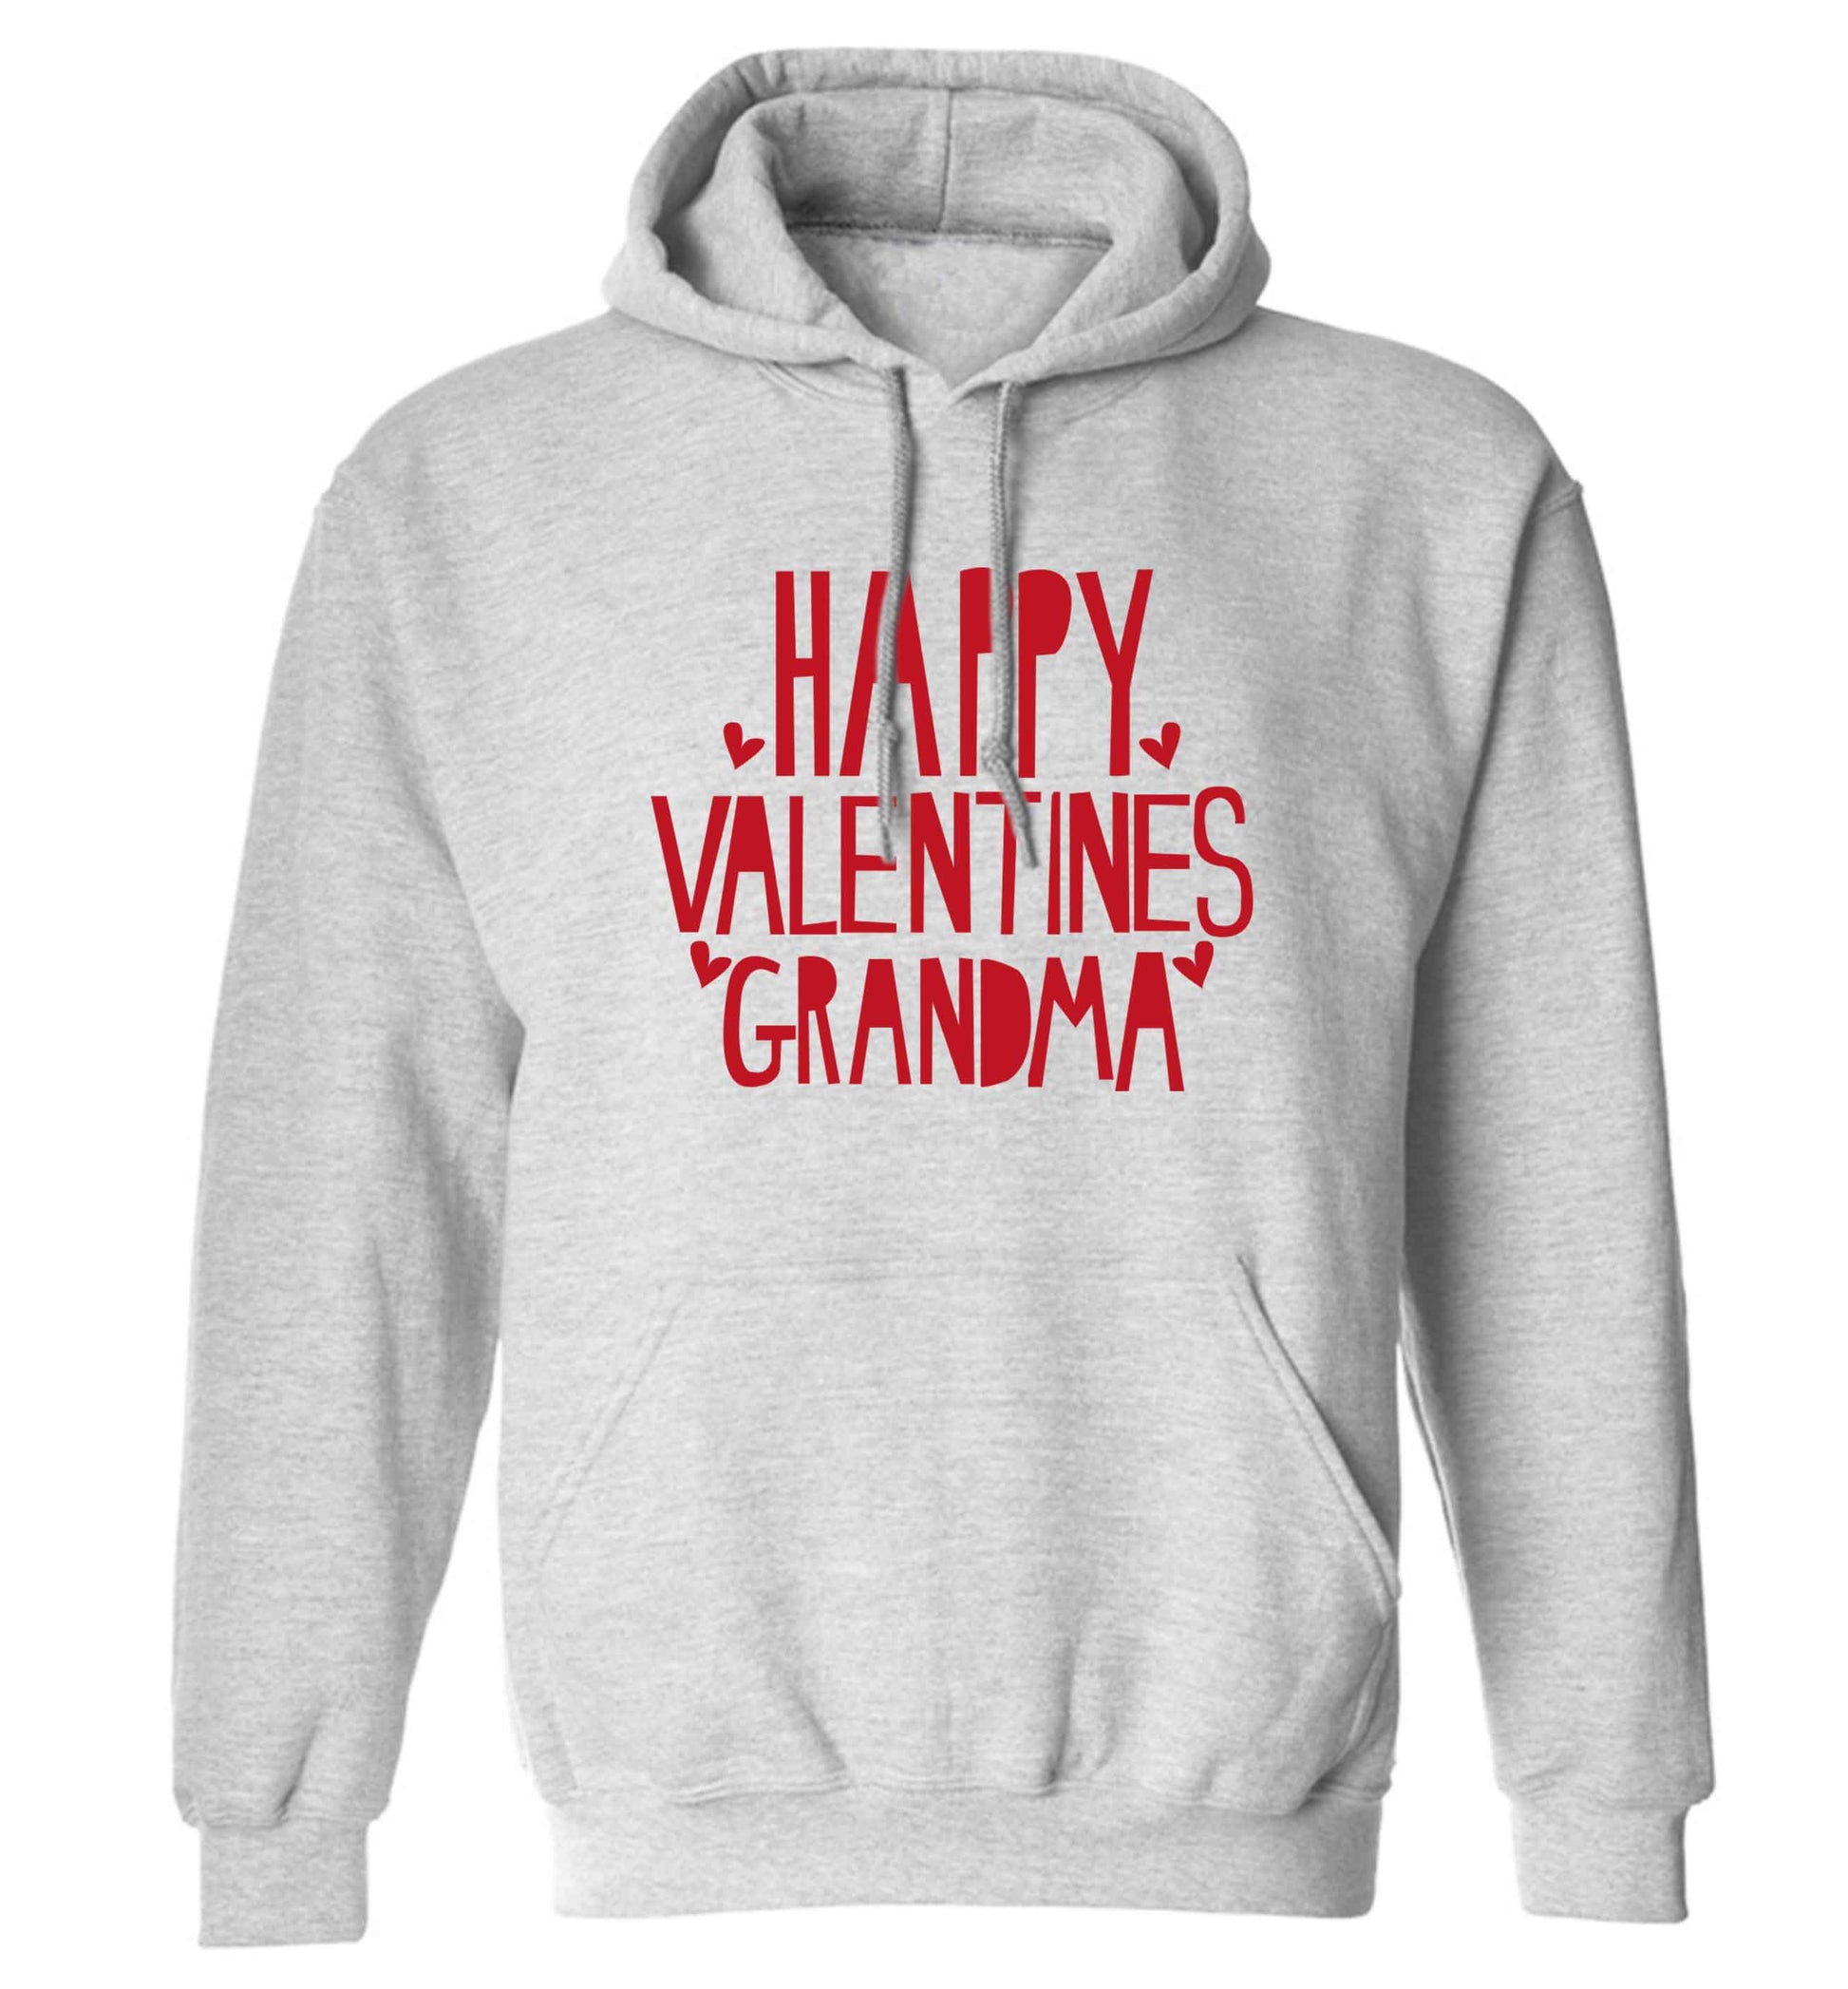 Happy valentines grandma adults unisex grey hoodie 2XL